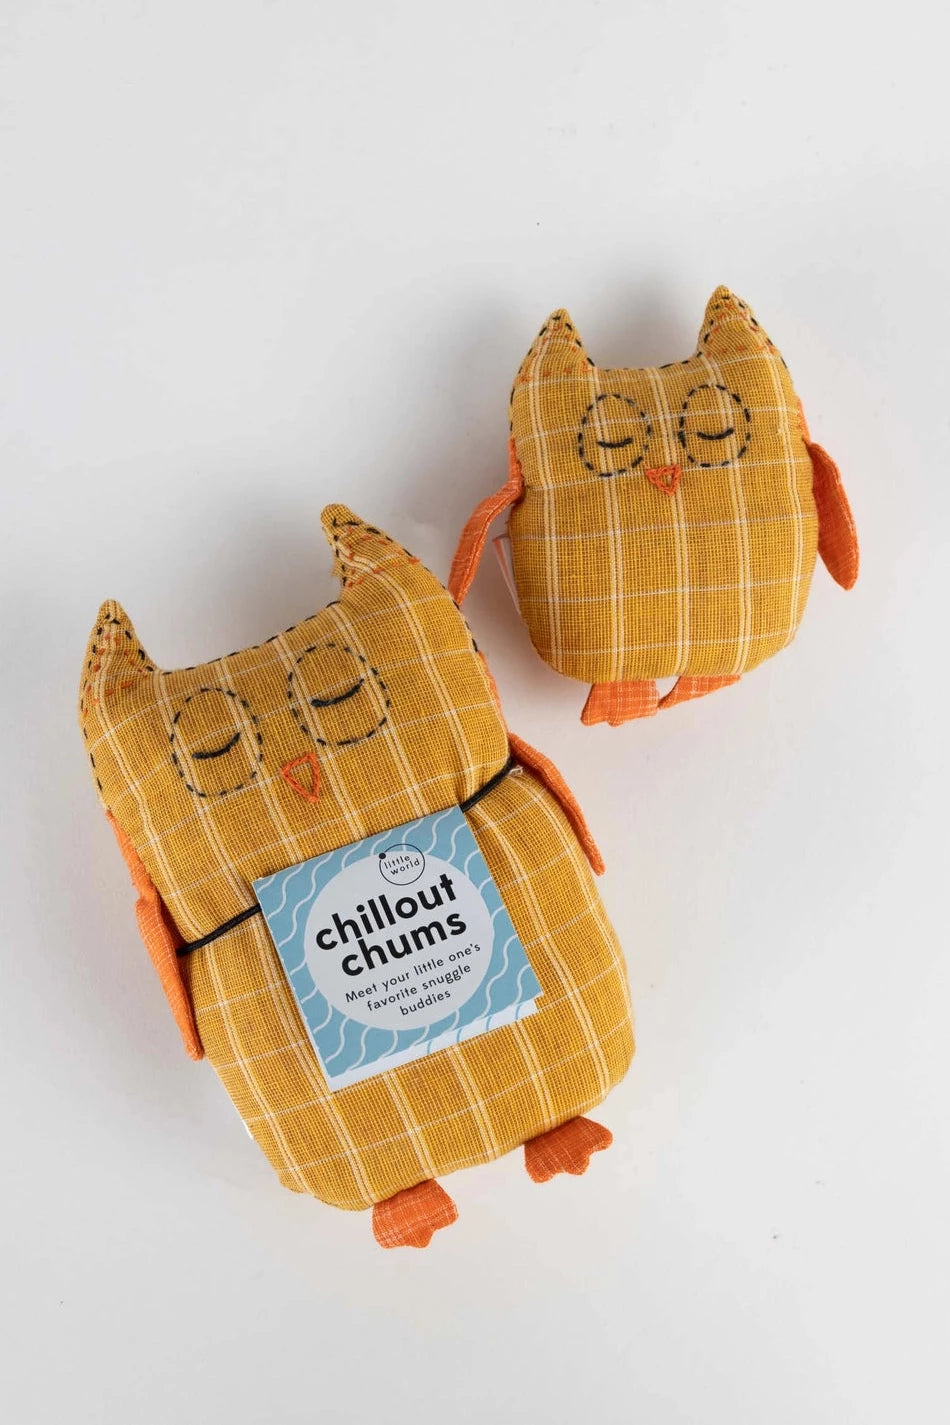 Chillout Chums Stuffed Animal Sets